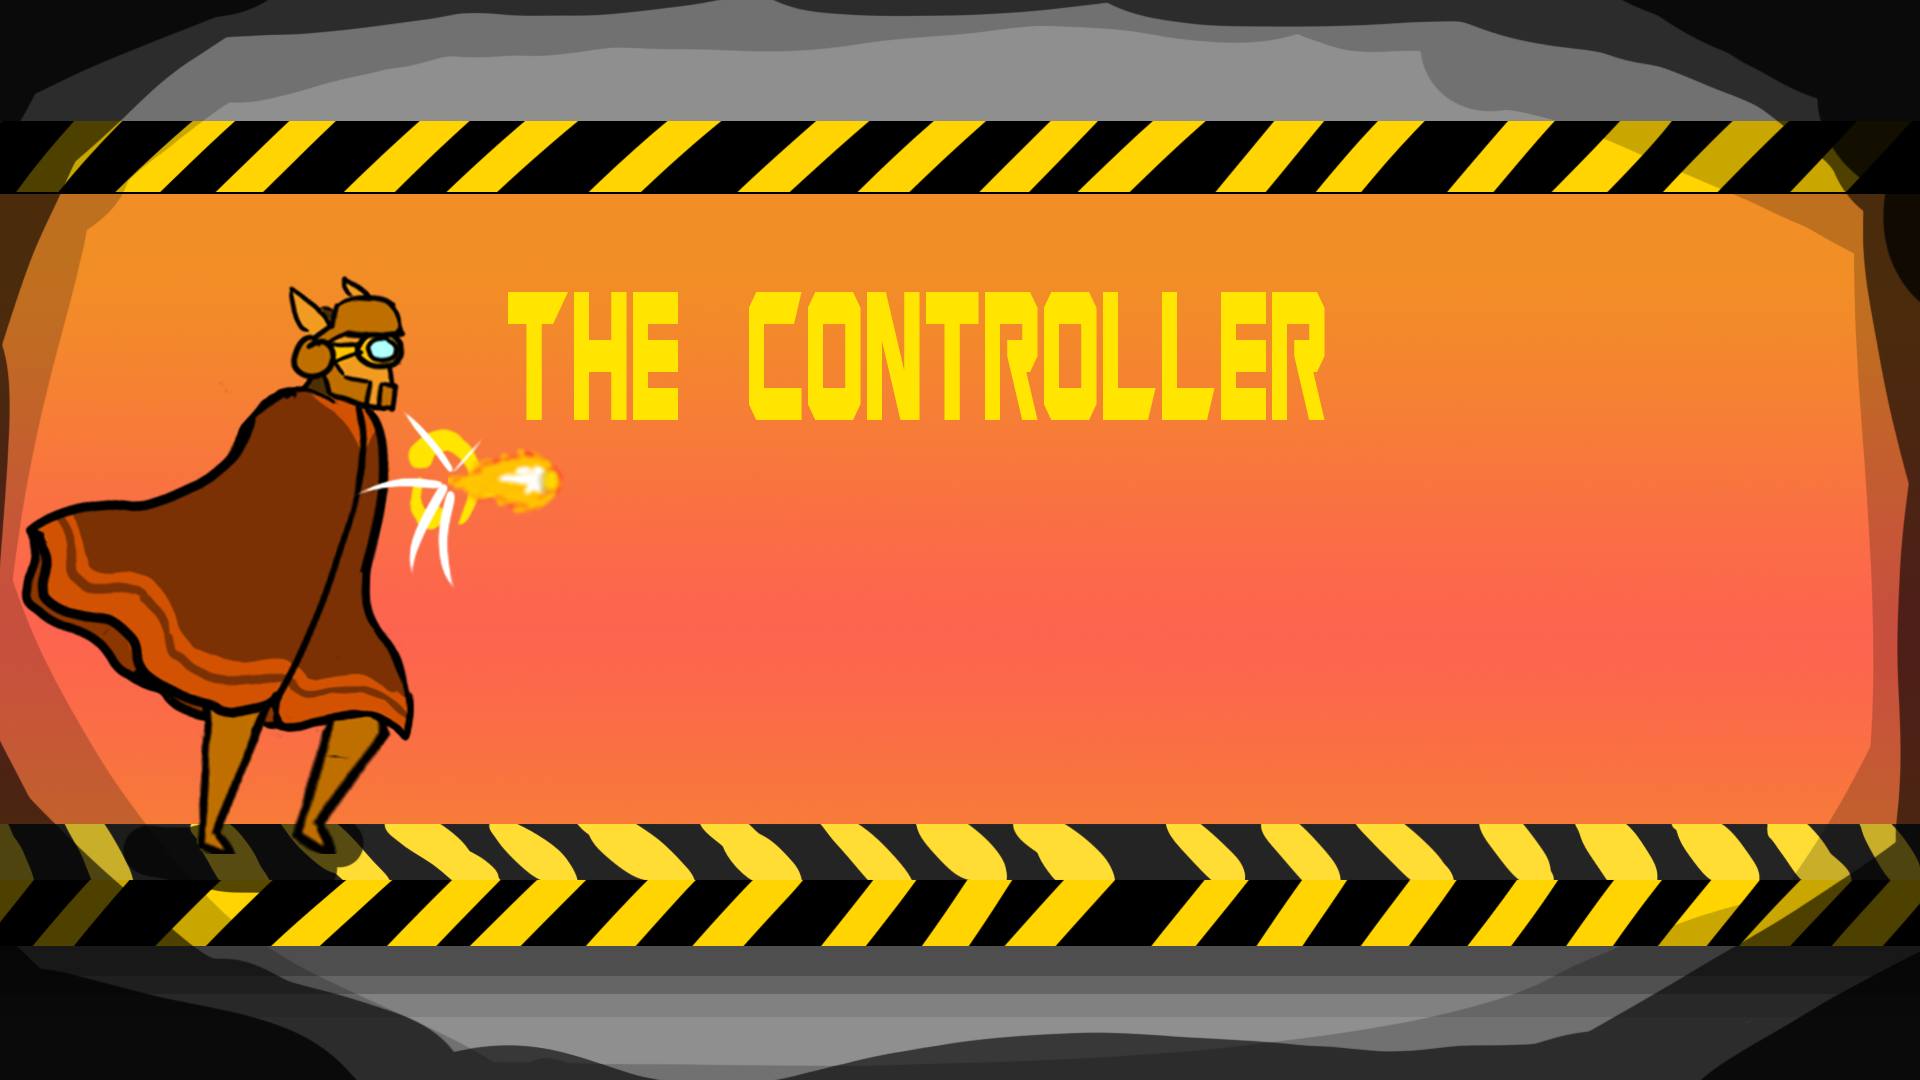 The controller